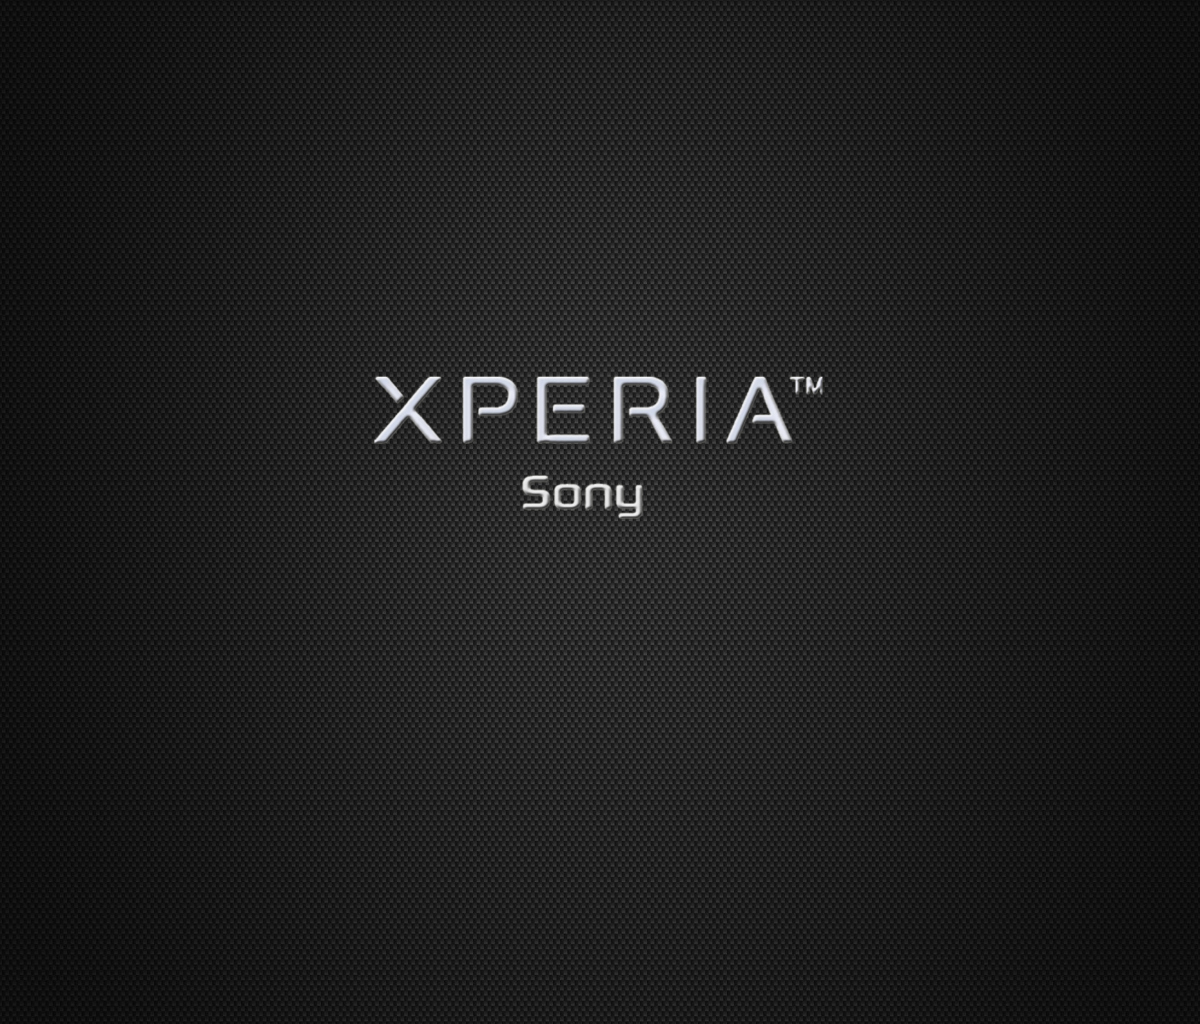 Sony Xperia wallpaper 1200x1024